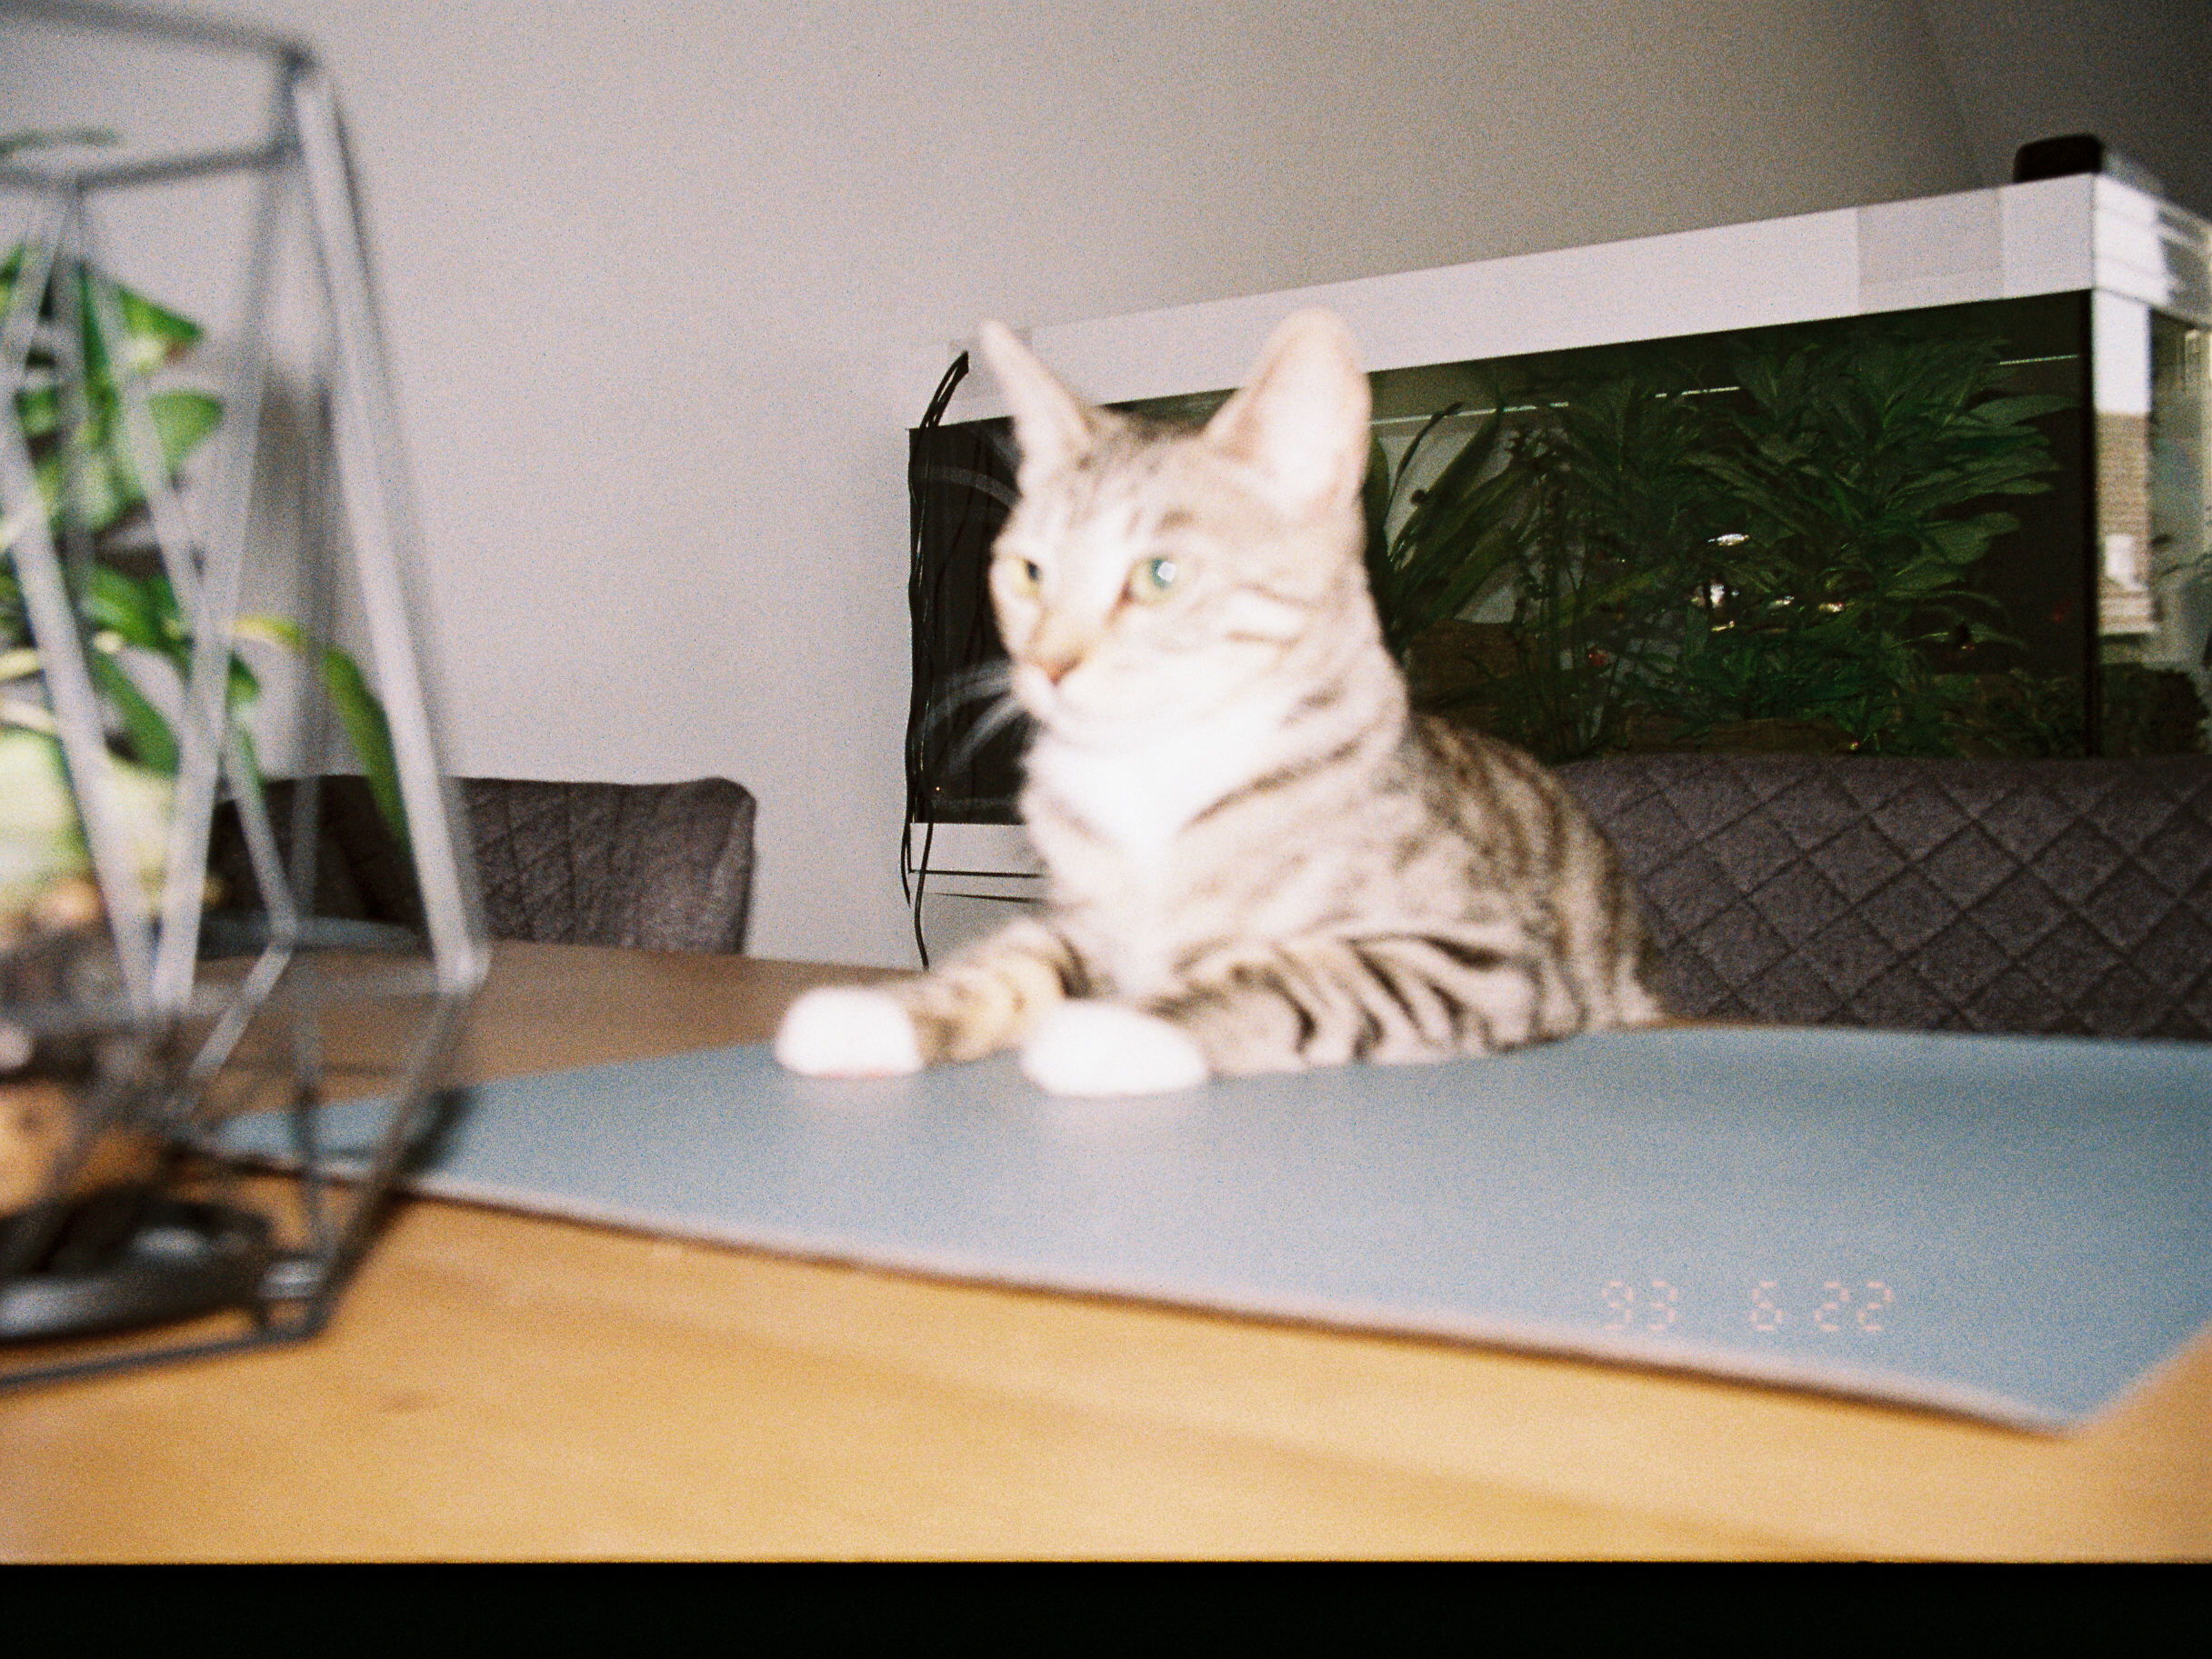 Katzenbetreuung, cats on film &#8211; my analog project